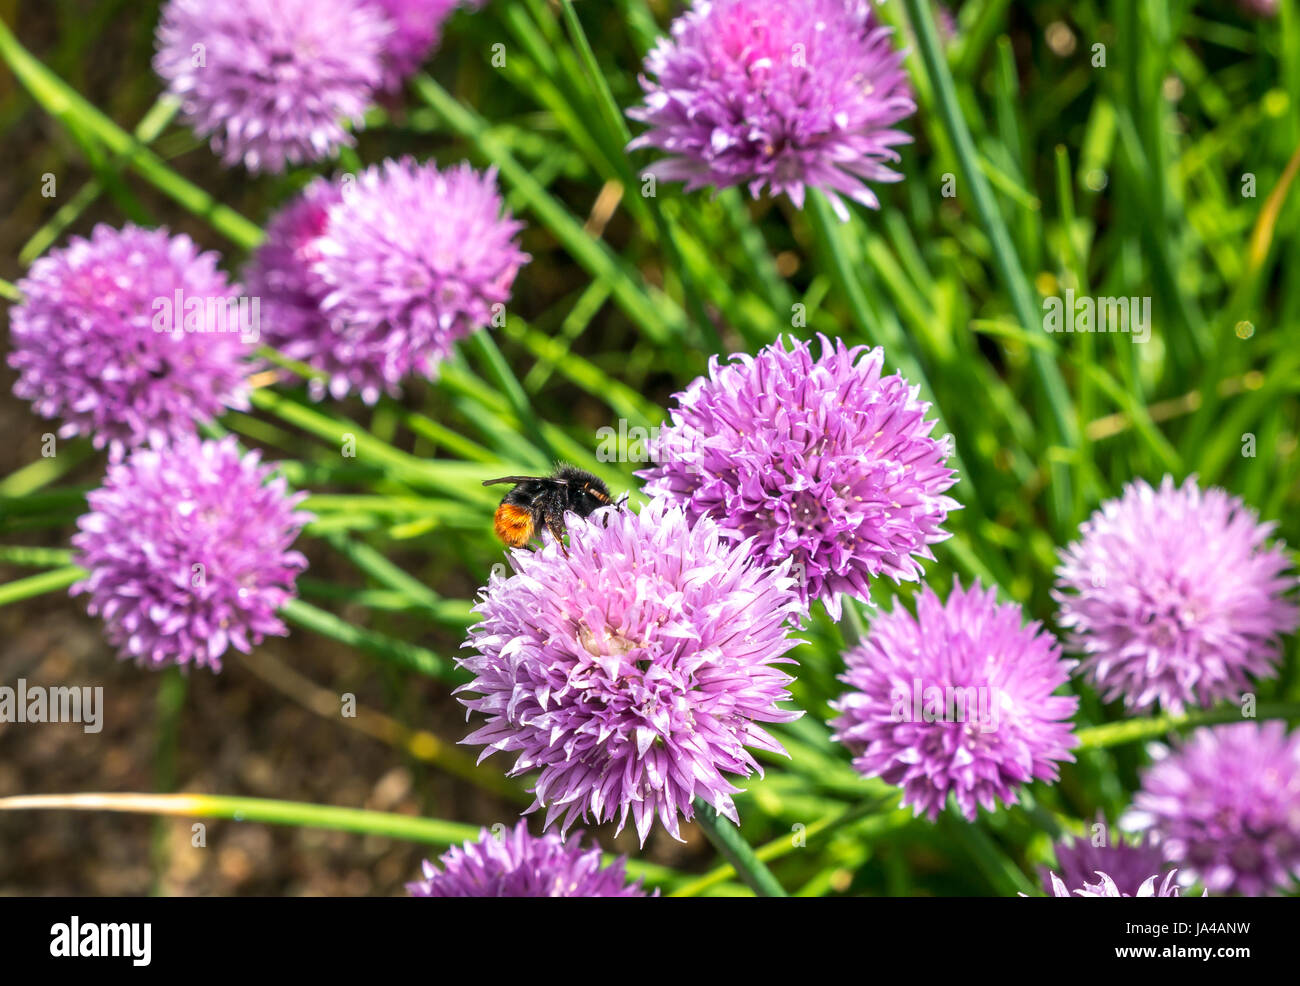 Close up of red tailed bumblebee, Bombus Lapidarius, on purple chive flower, Allium schoenoprasum, Scotland, UK Stock Photo